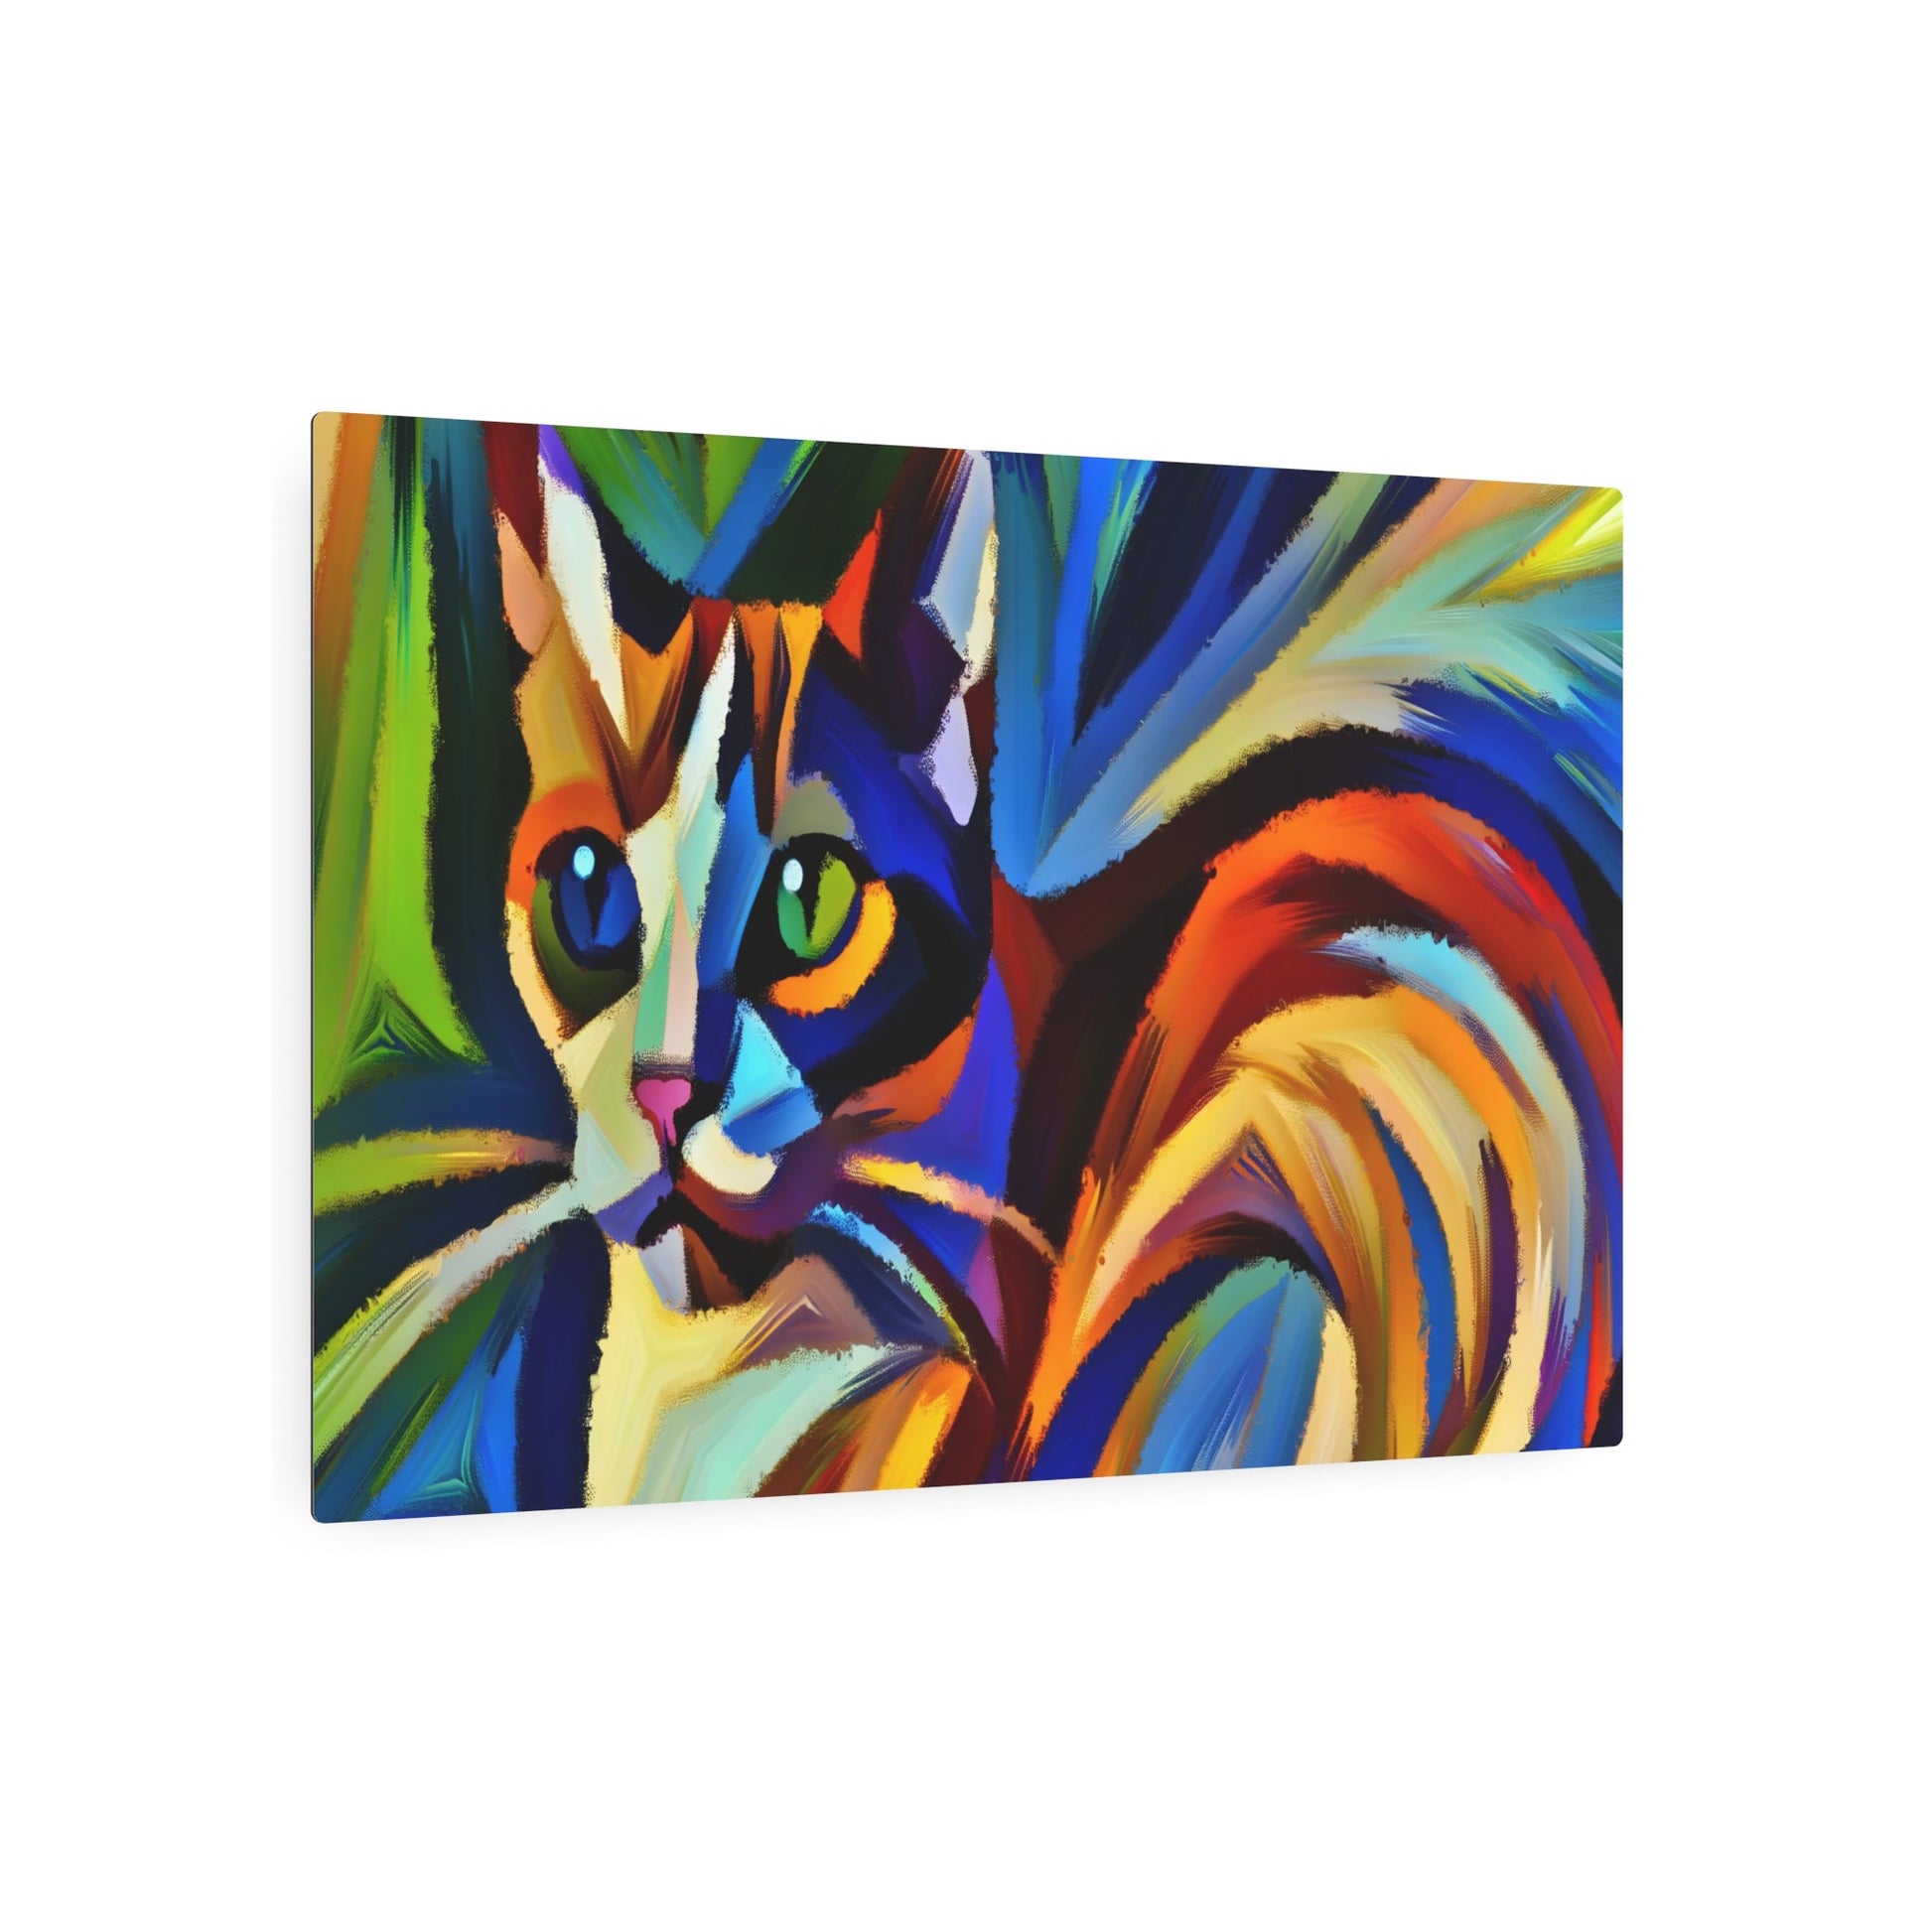 Metal Poster Art | "Expressionist Cat Art in Vibrant Colors - Emotional Feline Depiction in Western Expressionism Style" - Metal Poster Art 36″ x 24″ (Horizontal) 0.12''